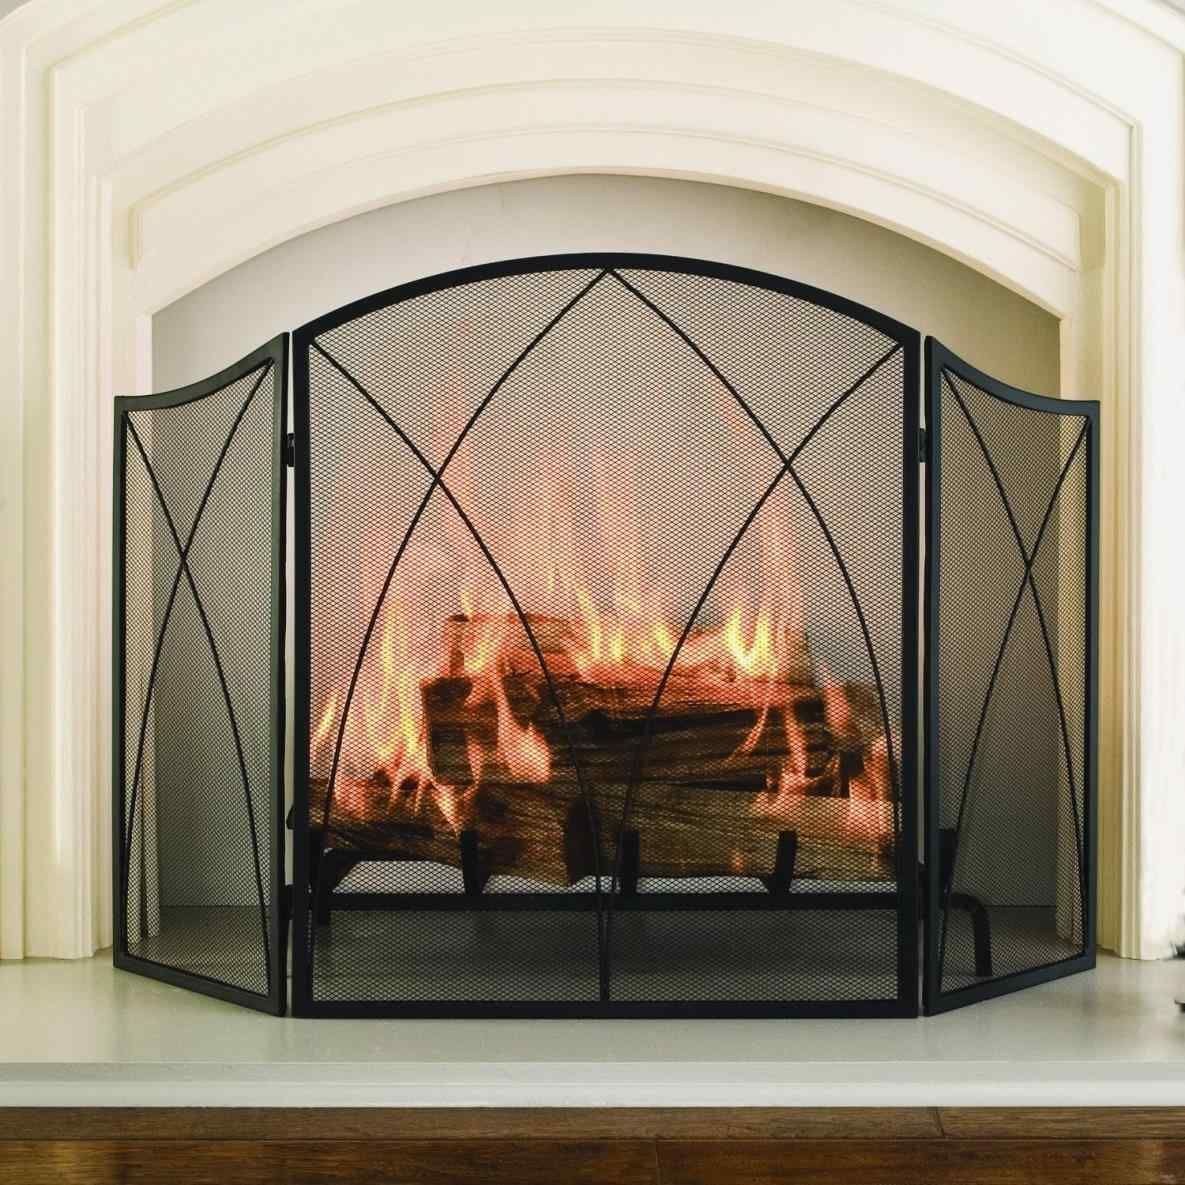 Decorative Gas Fireplace Luxury 11 Best Fancy Fireplace Screens Design and Decor Ideas